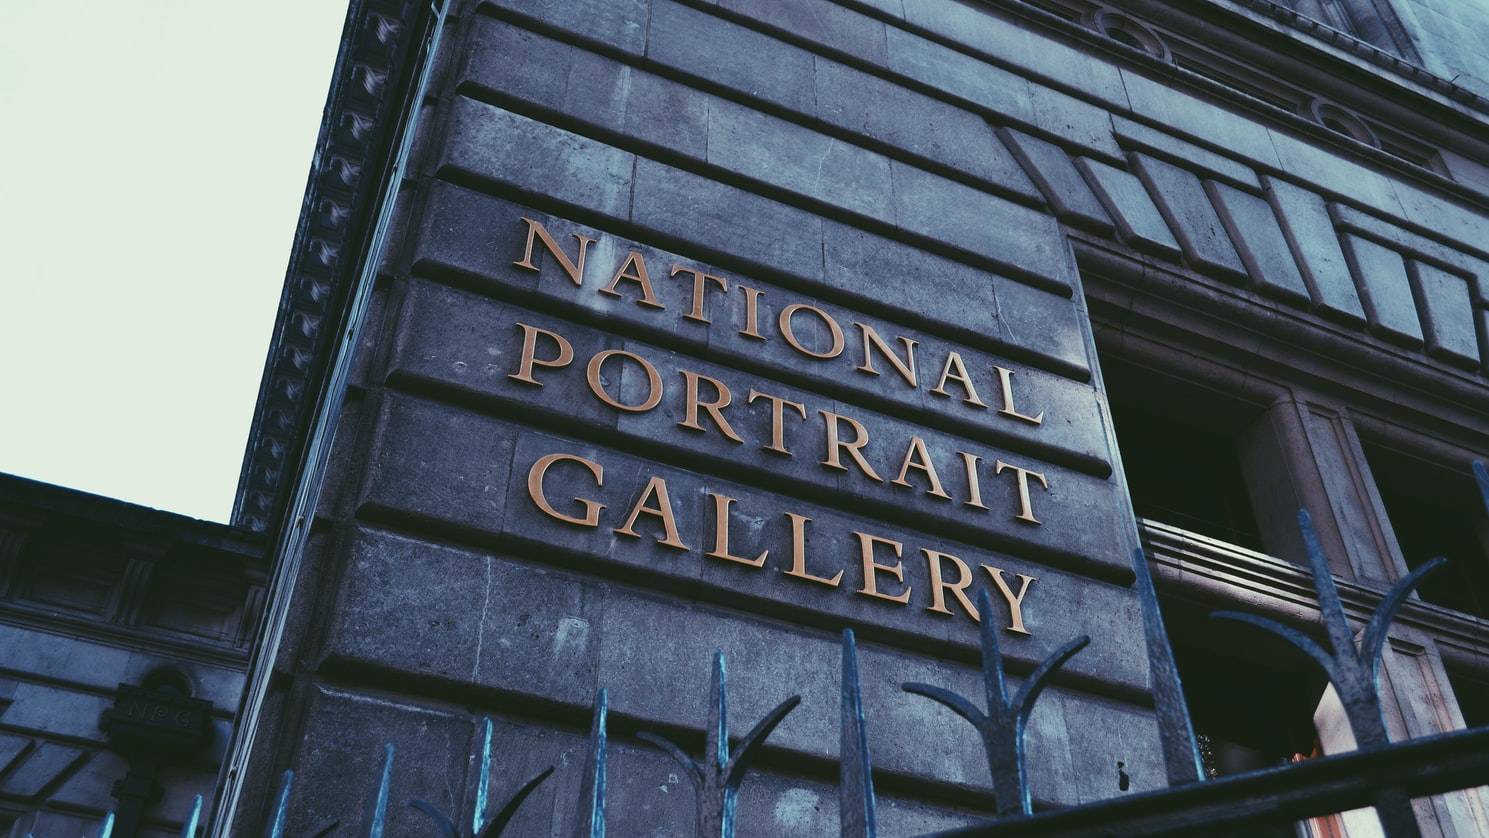 National Portrait Gallery Building